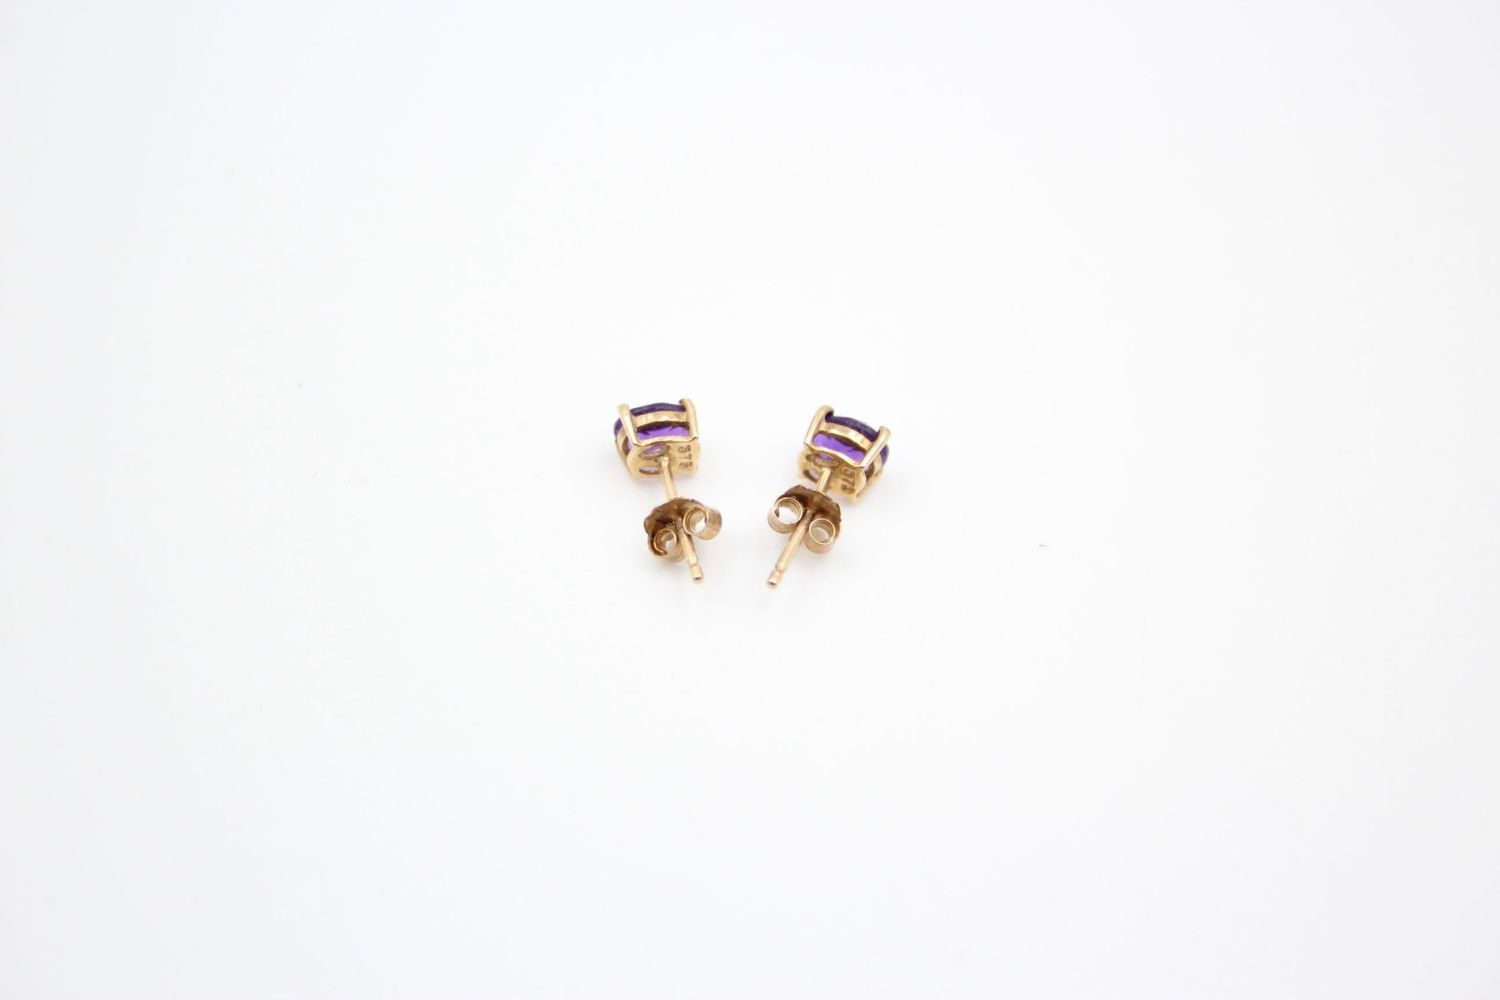 3 x 9ct gold gemstone earrings 1.9 grams gross - Image 7 of 11